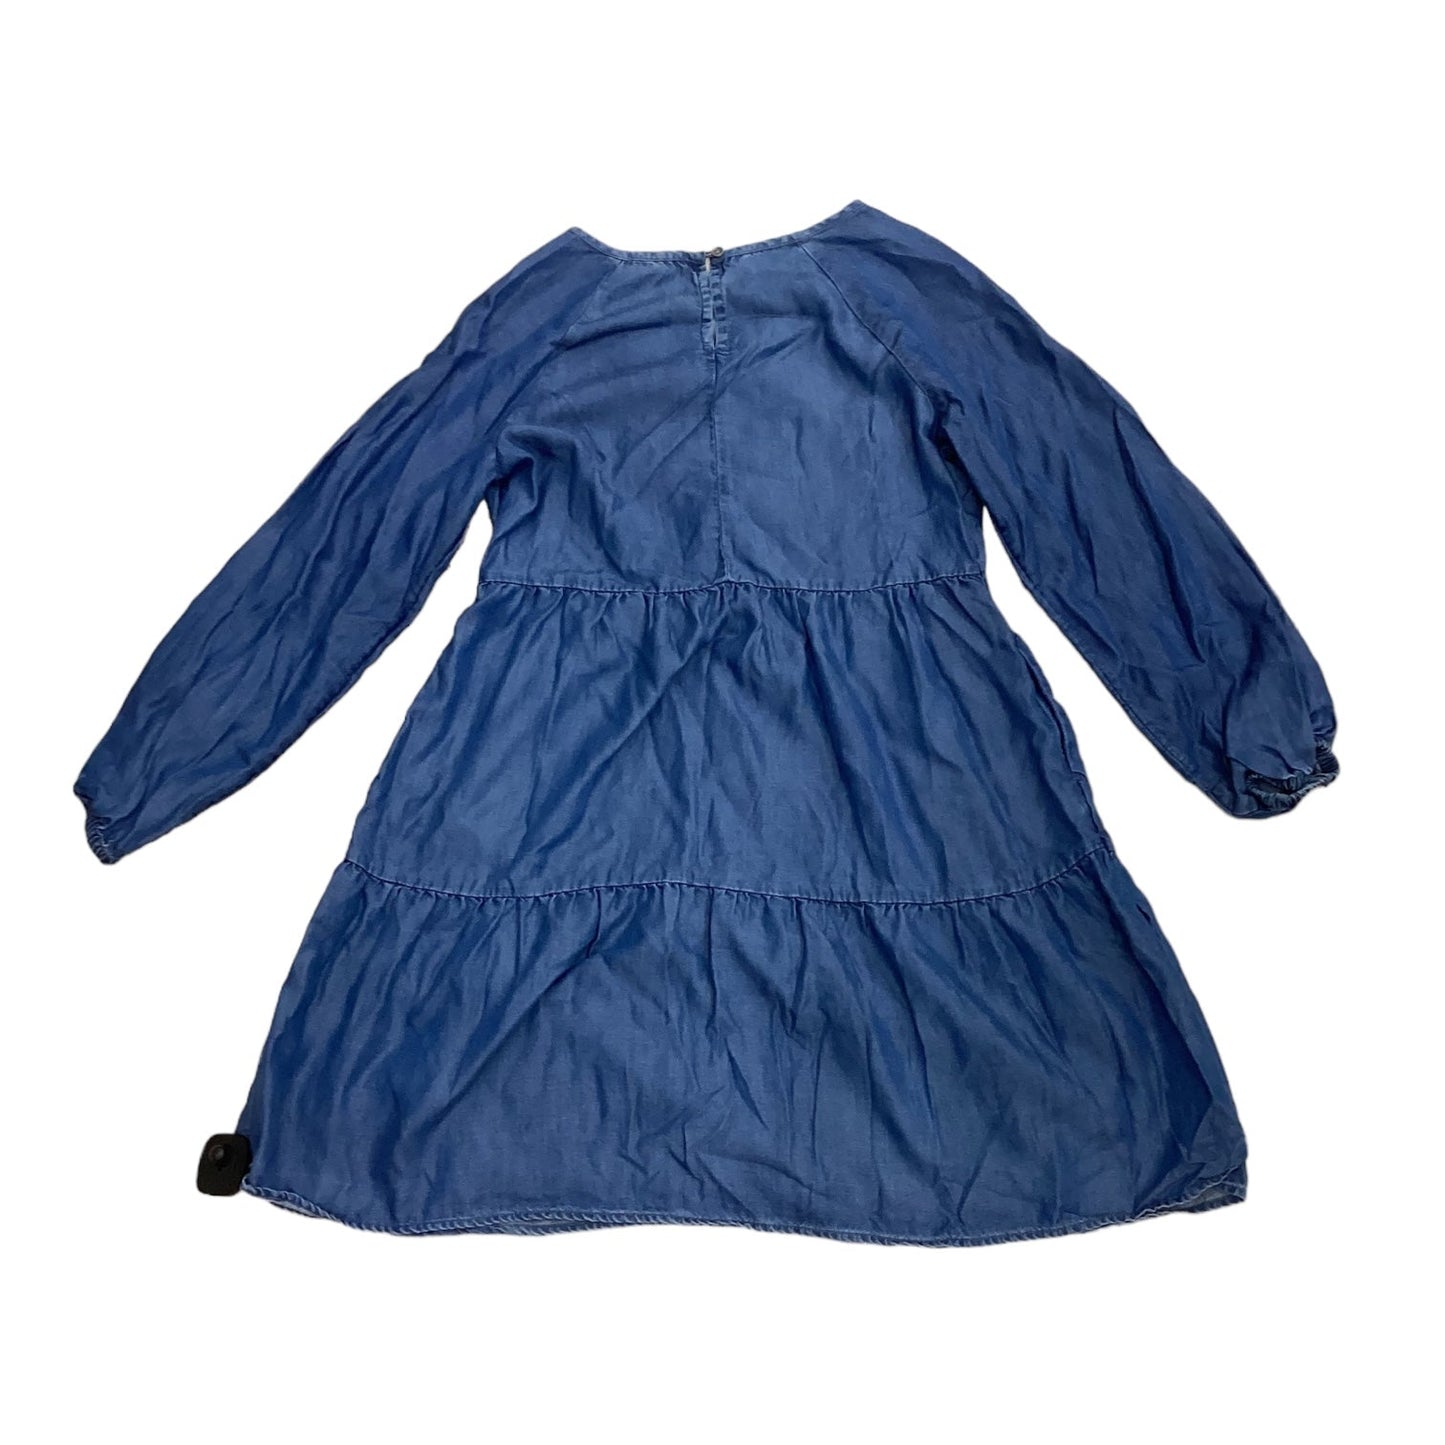 Blue Denim Dress Designer Beachlunchlounge, Size Xs